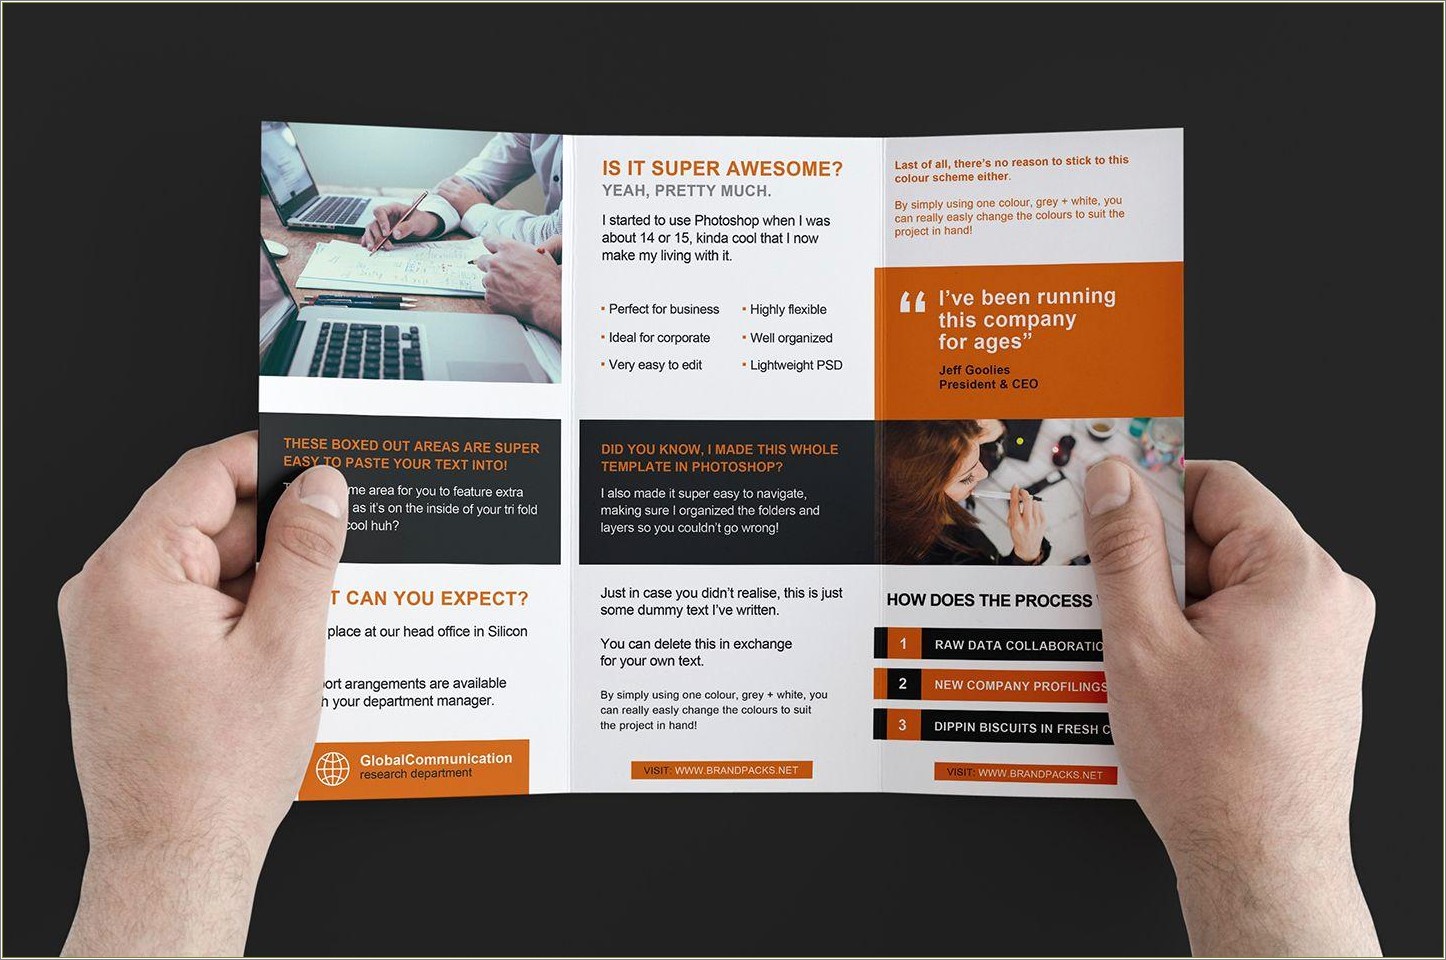 Business Tri Fold Brochure Templates Free